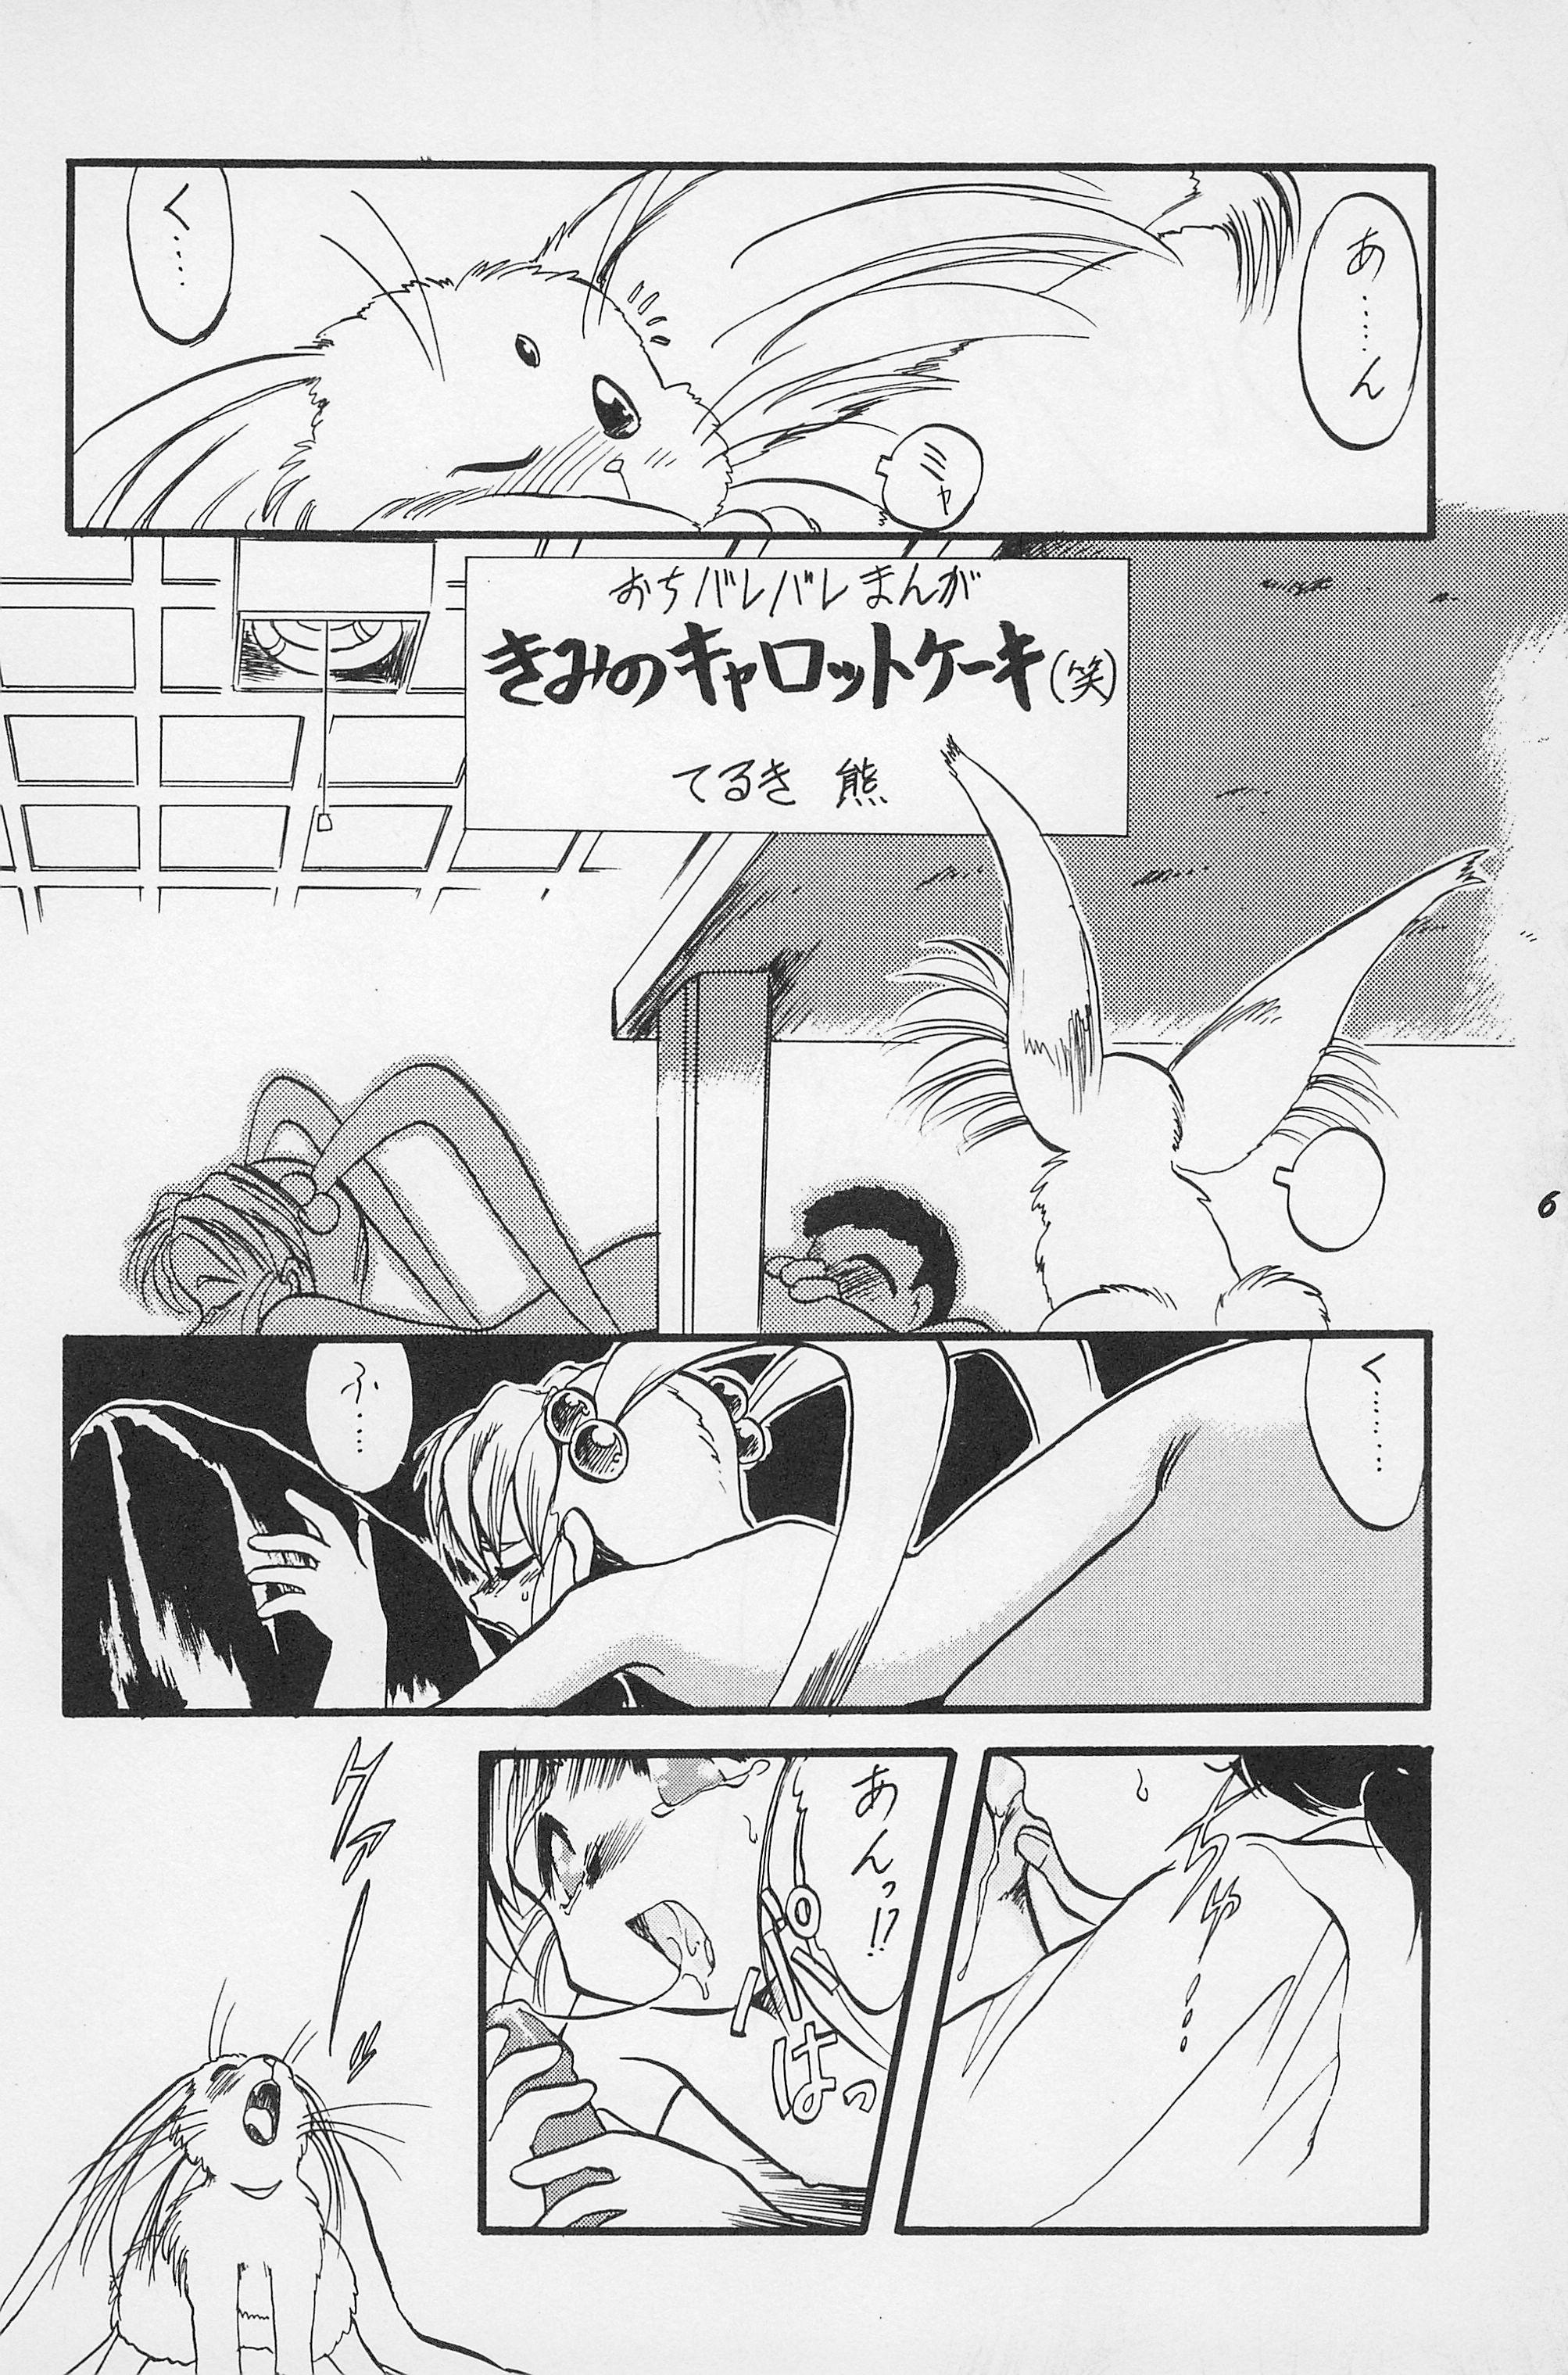 Best Blowjobs Teddy Bear no Omise Vol. 1 - Sailor moon Darkstalkers Tenchi muyo Earthbound Samurai pizza cats Jock - Page 8